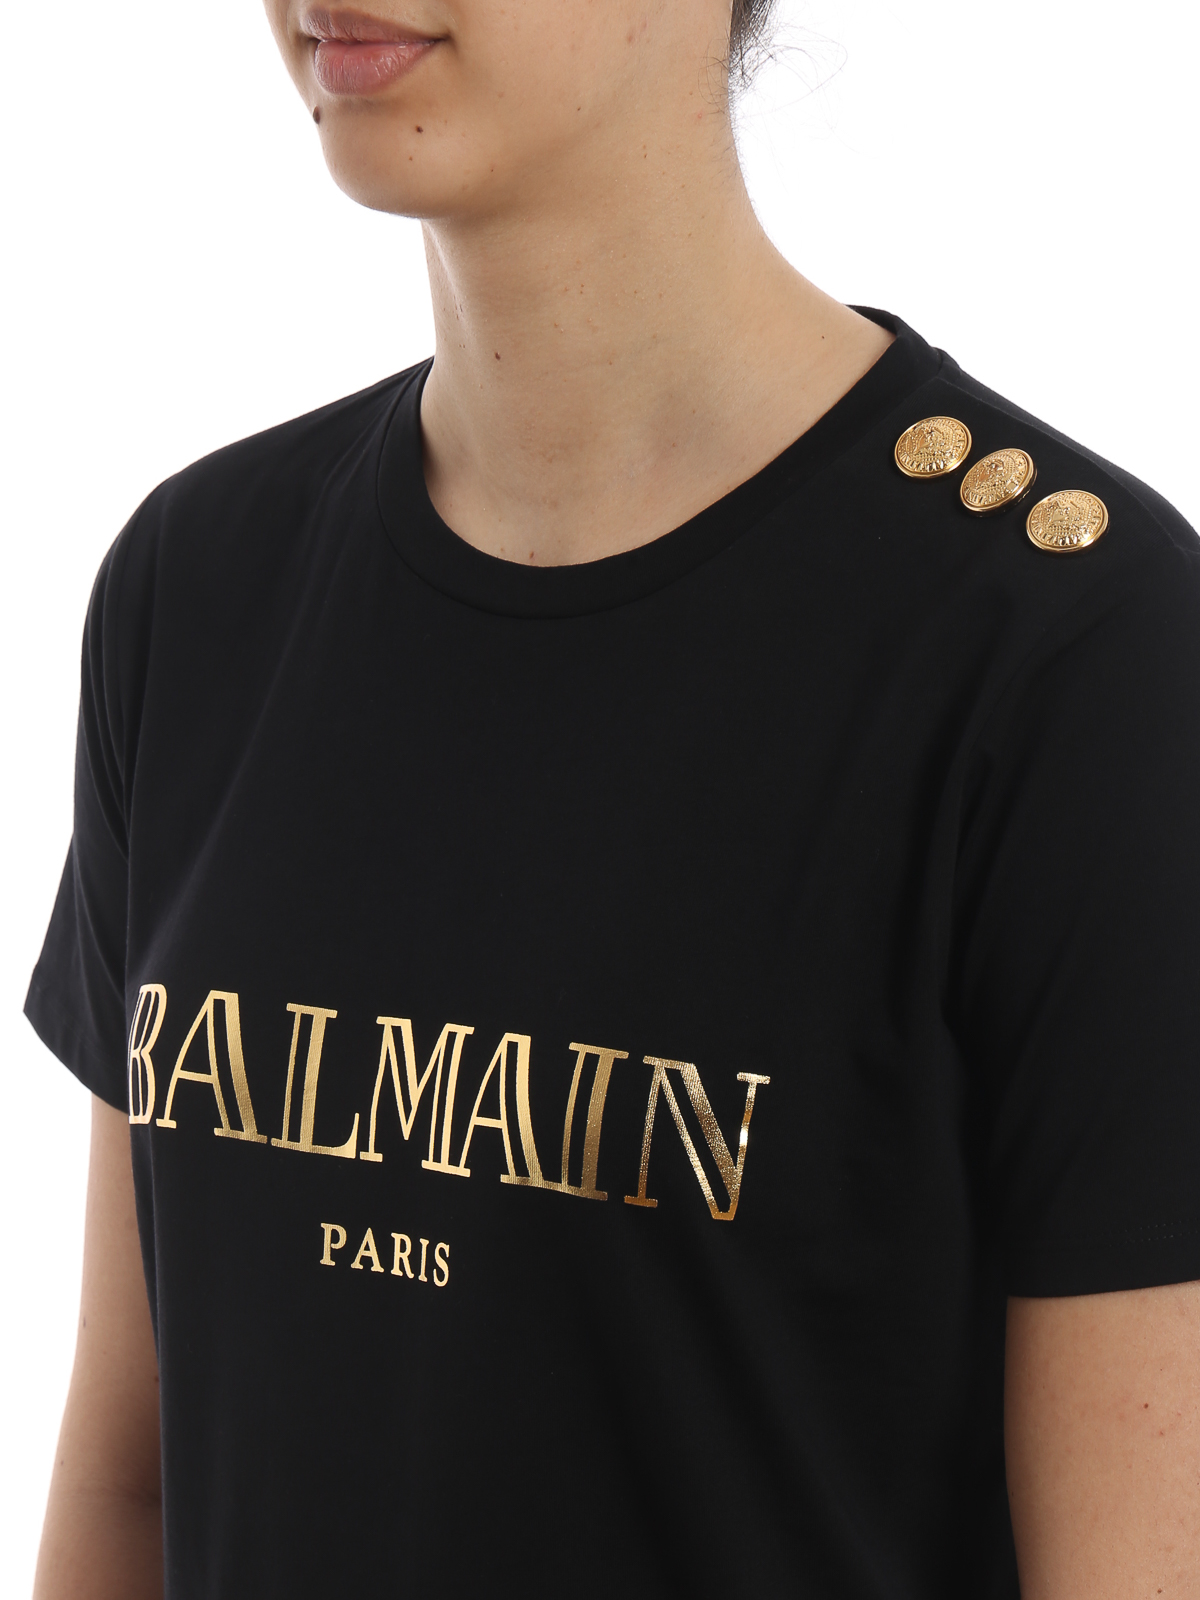 BALMAIN T-Shirt Schwarz S Mit Gold Logo